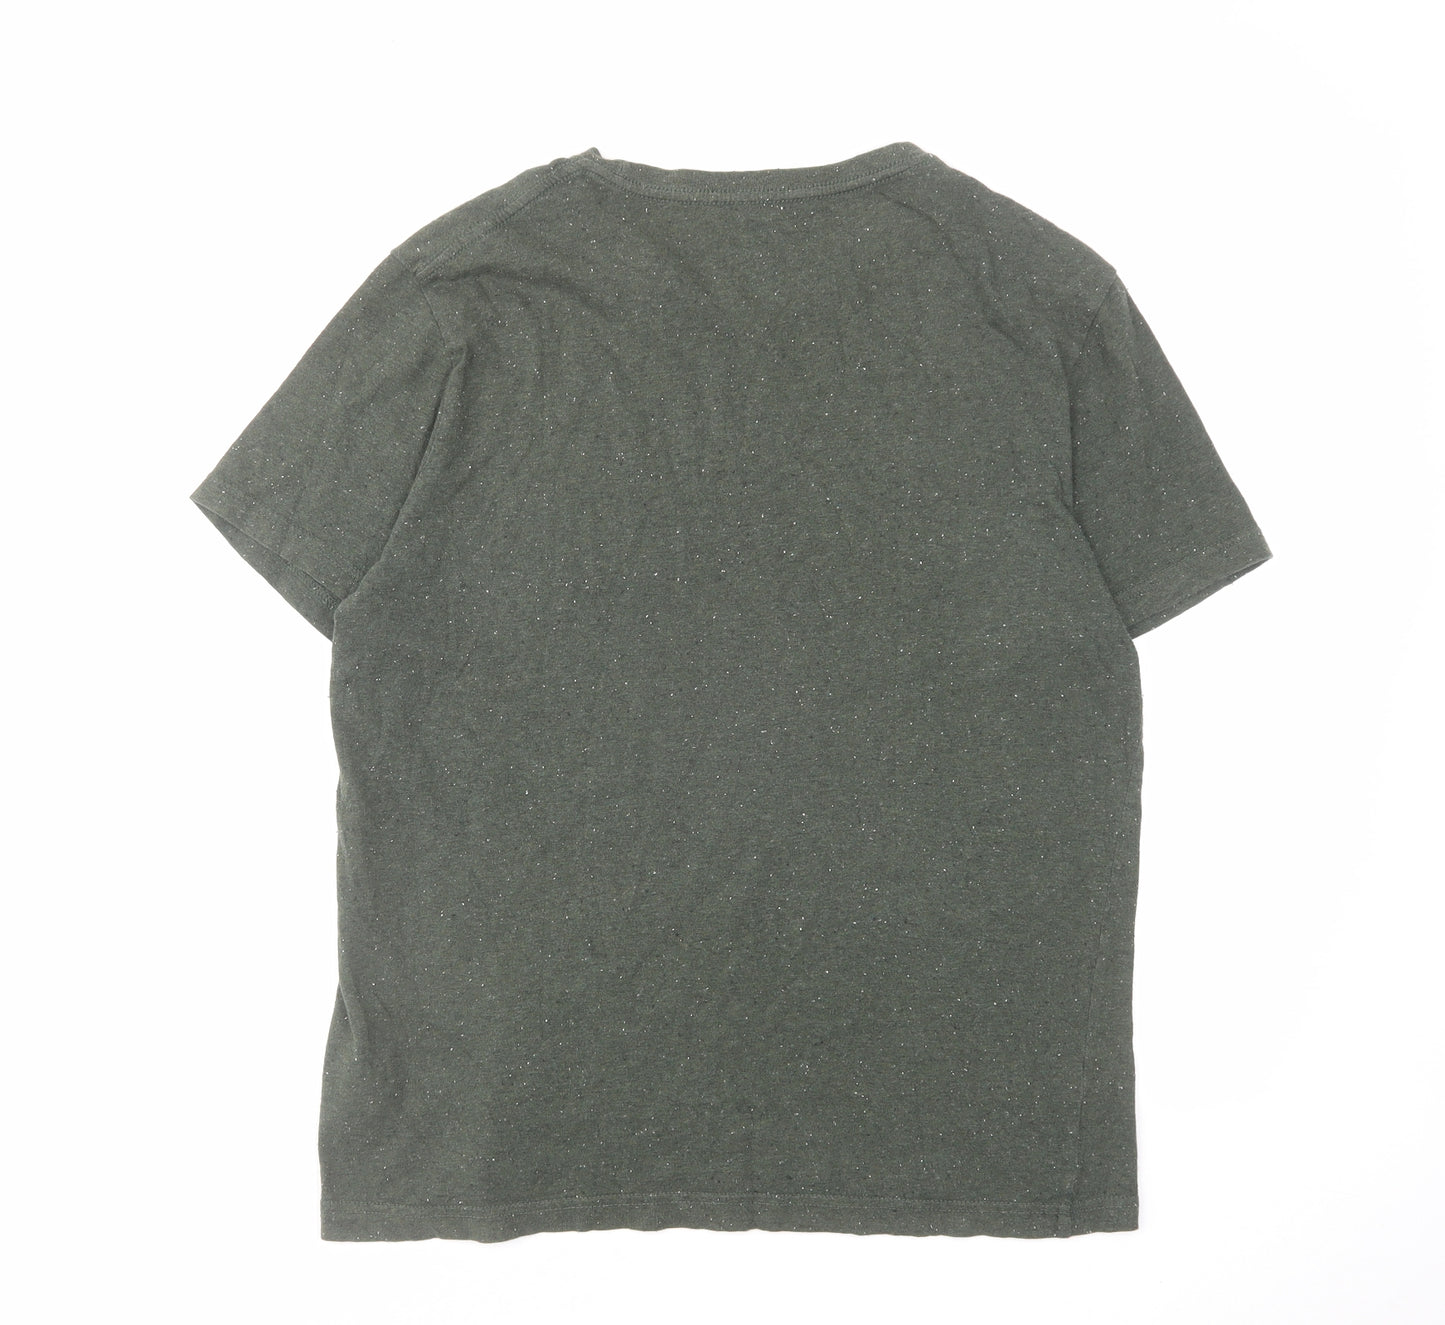 H&M Mens Green Cotton T-Shirt Size M Round Neck